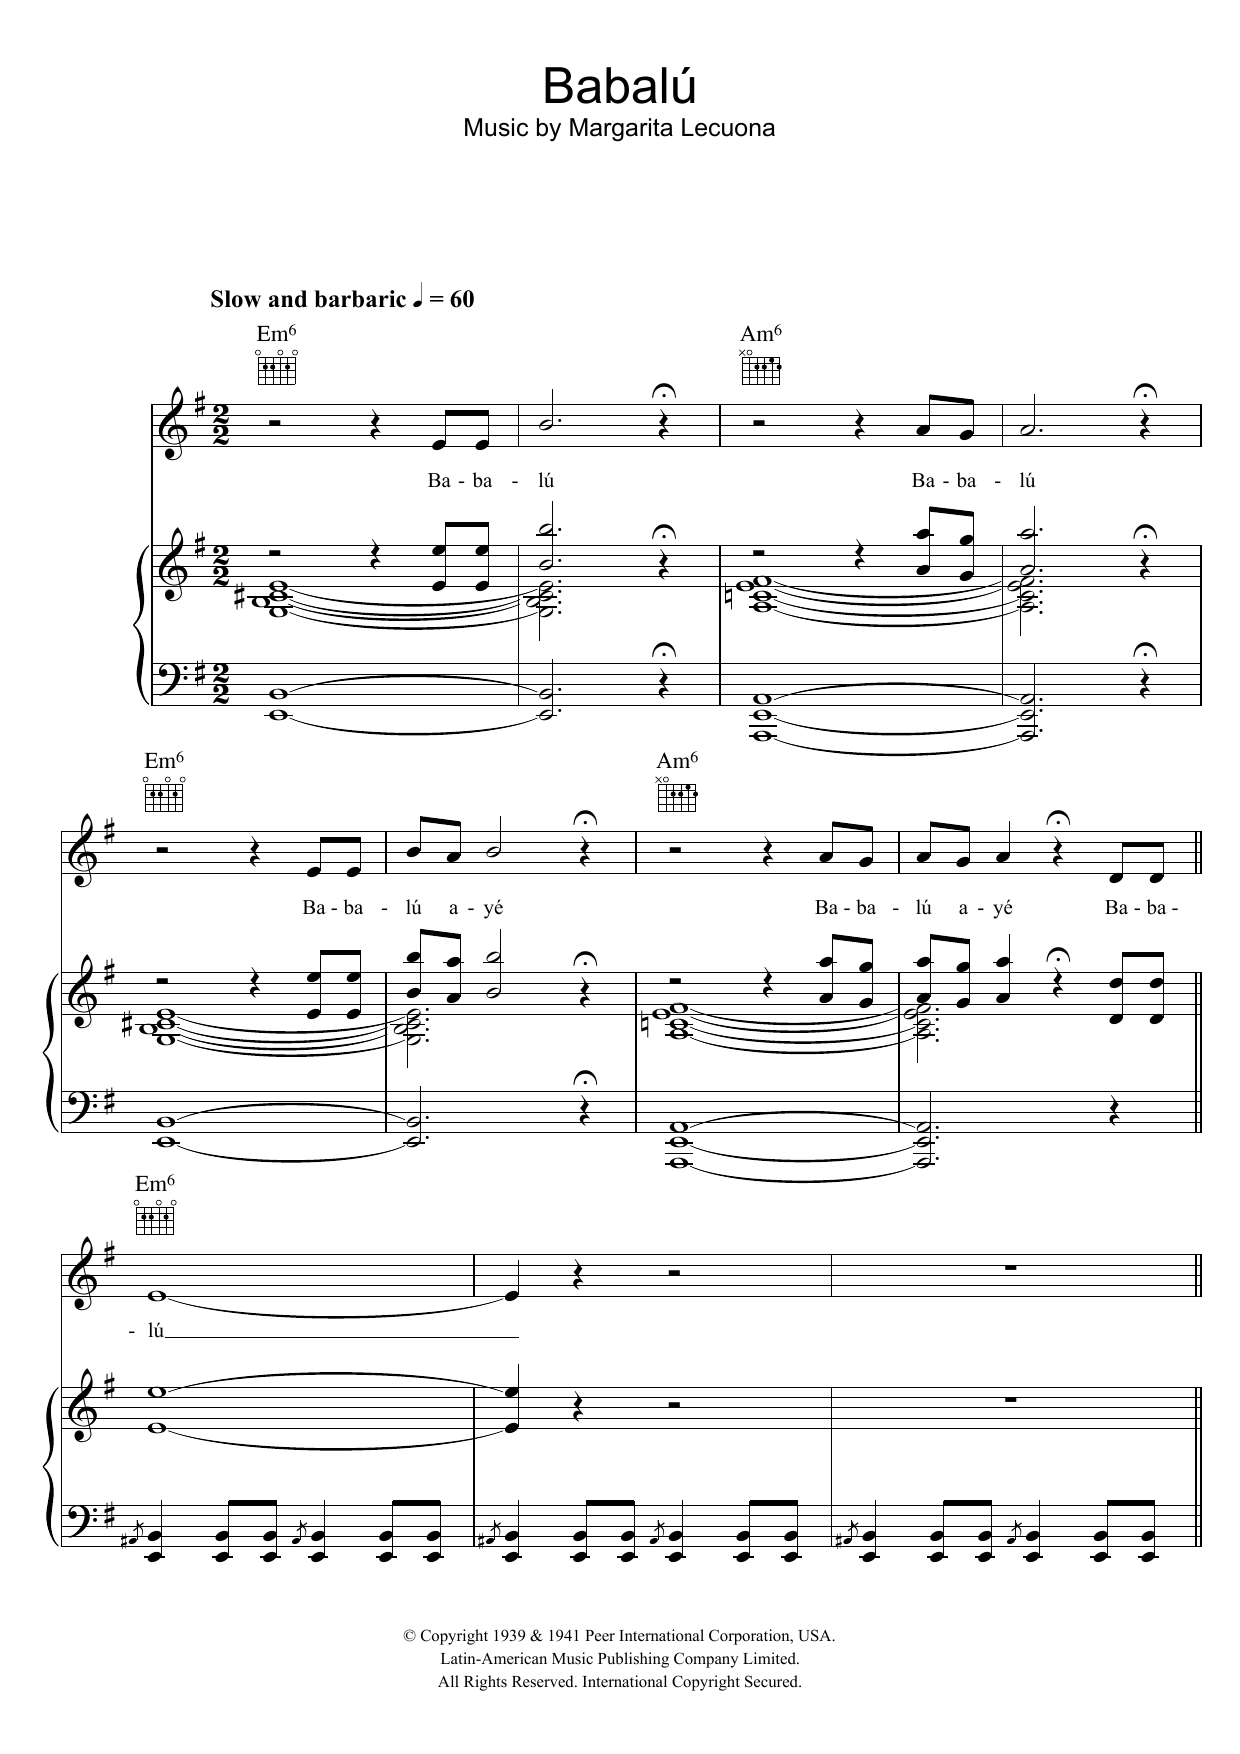 Margarita Lecuona Babalu Sheet Music Notes & Chords for Piano, Vocal & Guitar (Right-Hand Melody) - Download or Print PDF